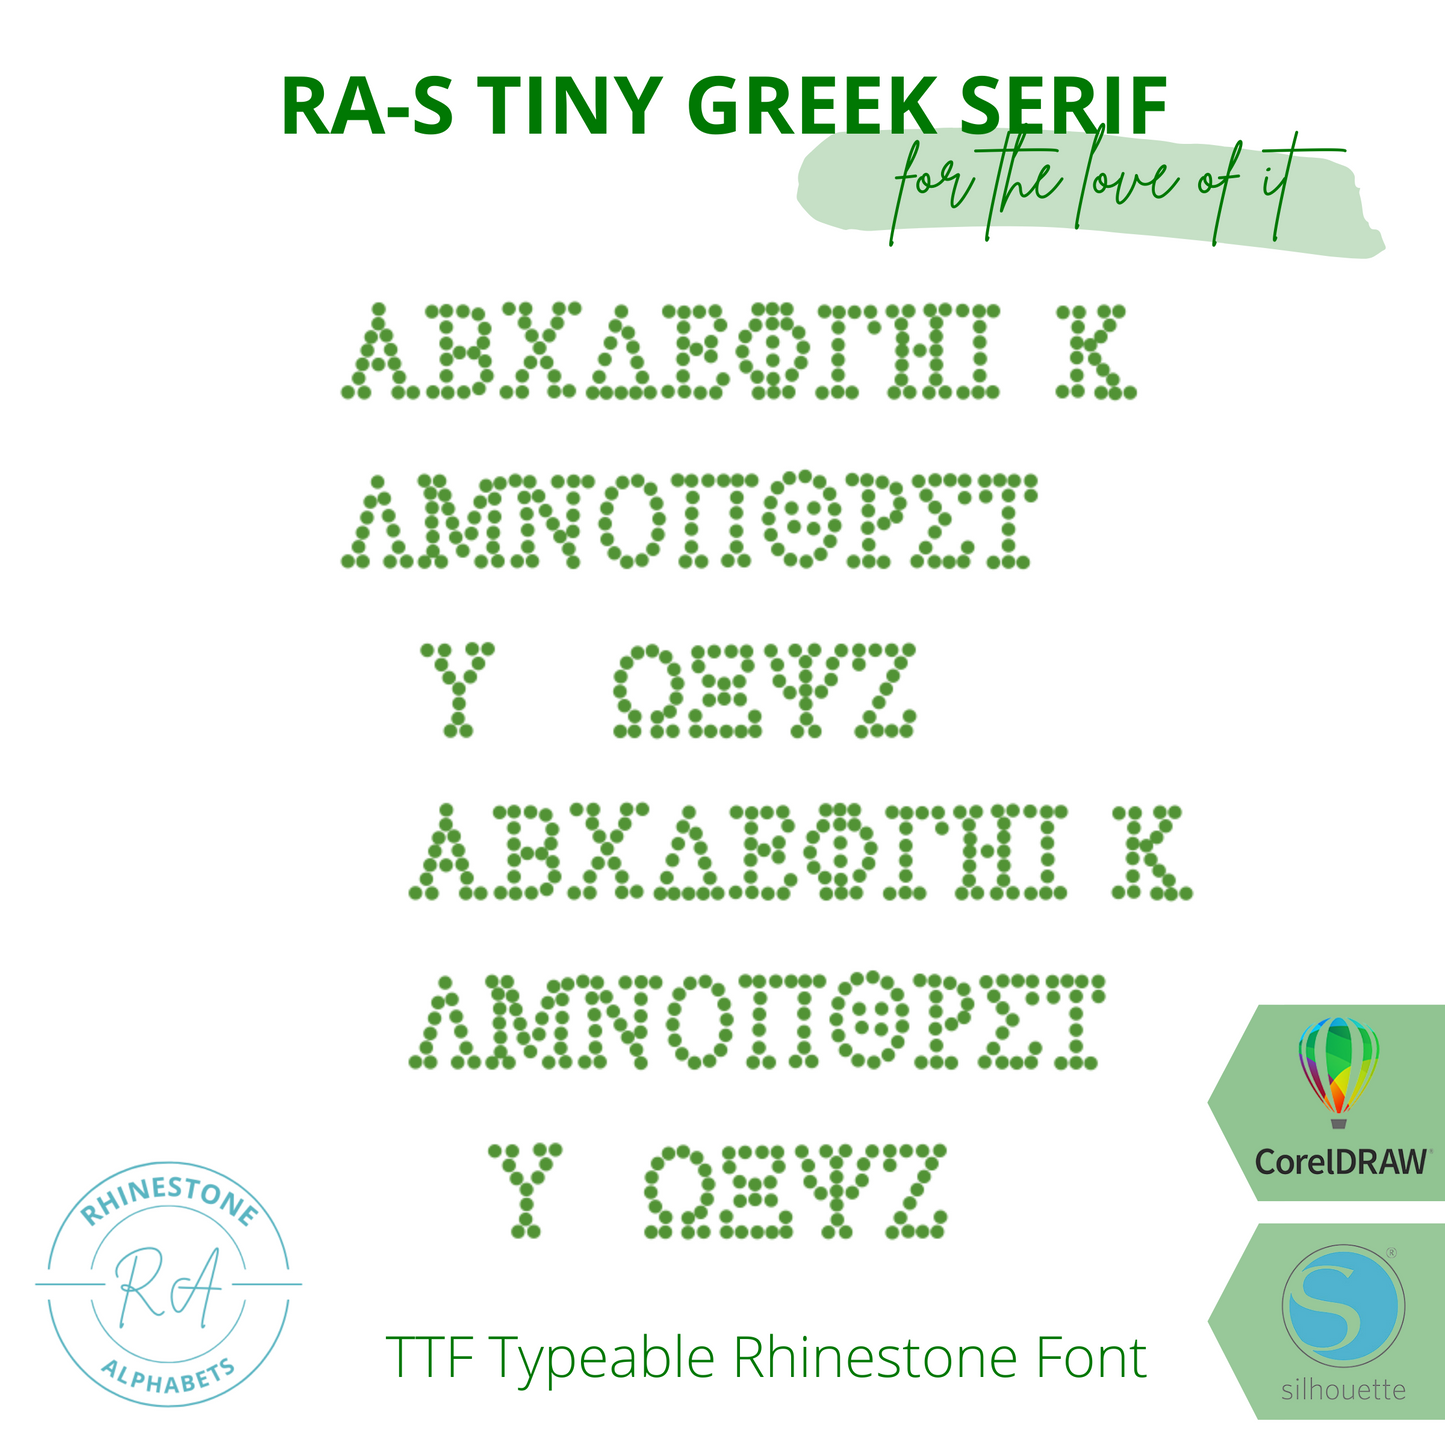 RA-S TIny Greek Serif - RhinestoneAlphabets